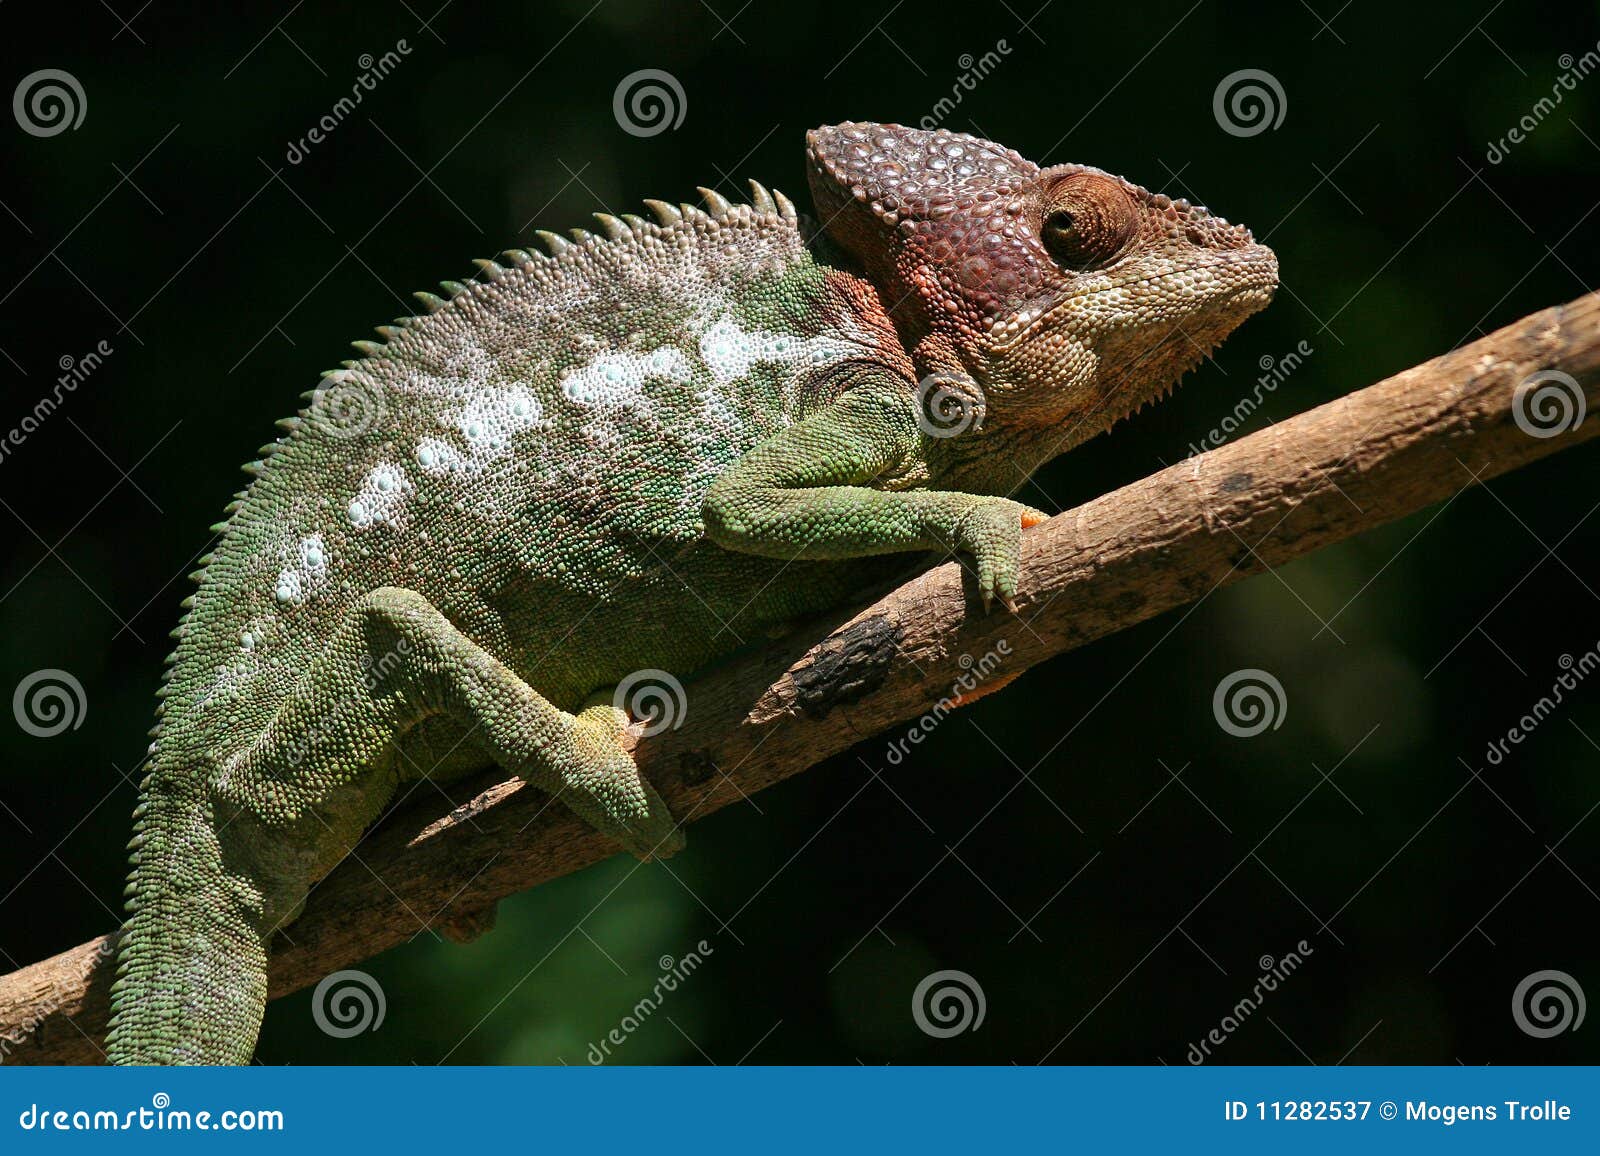 wild warty chameleon, madagascar